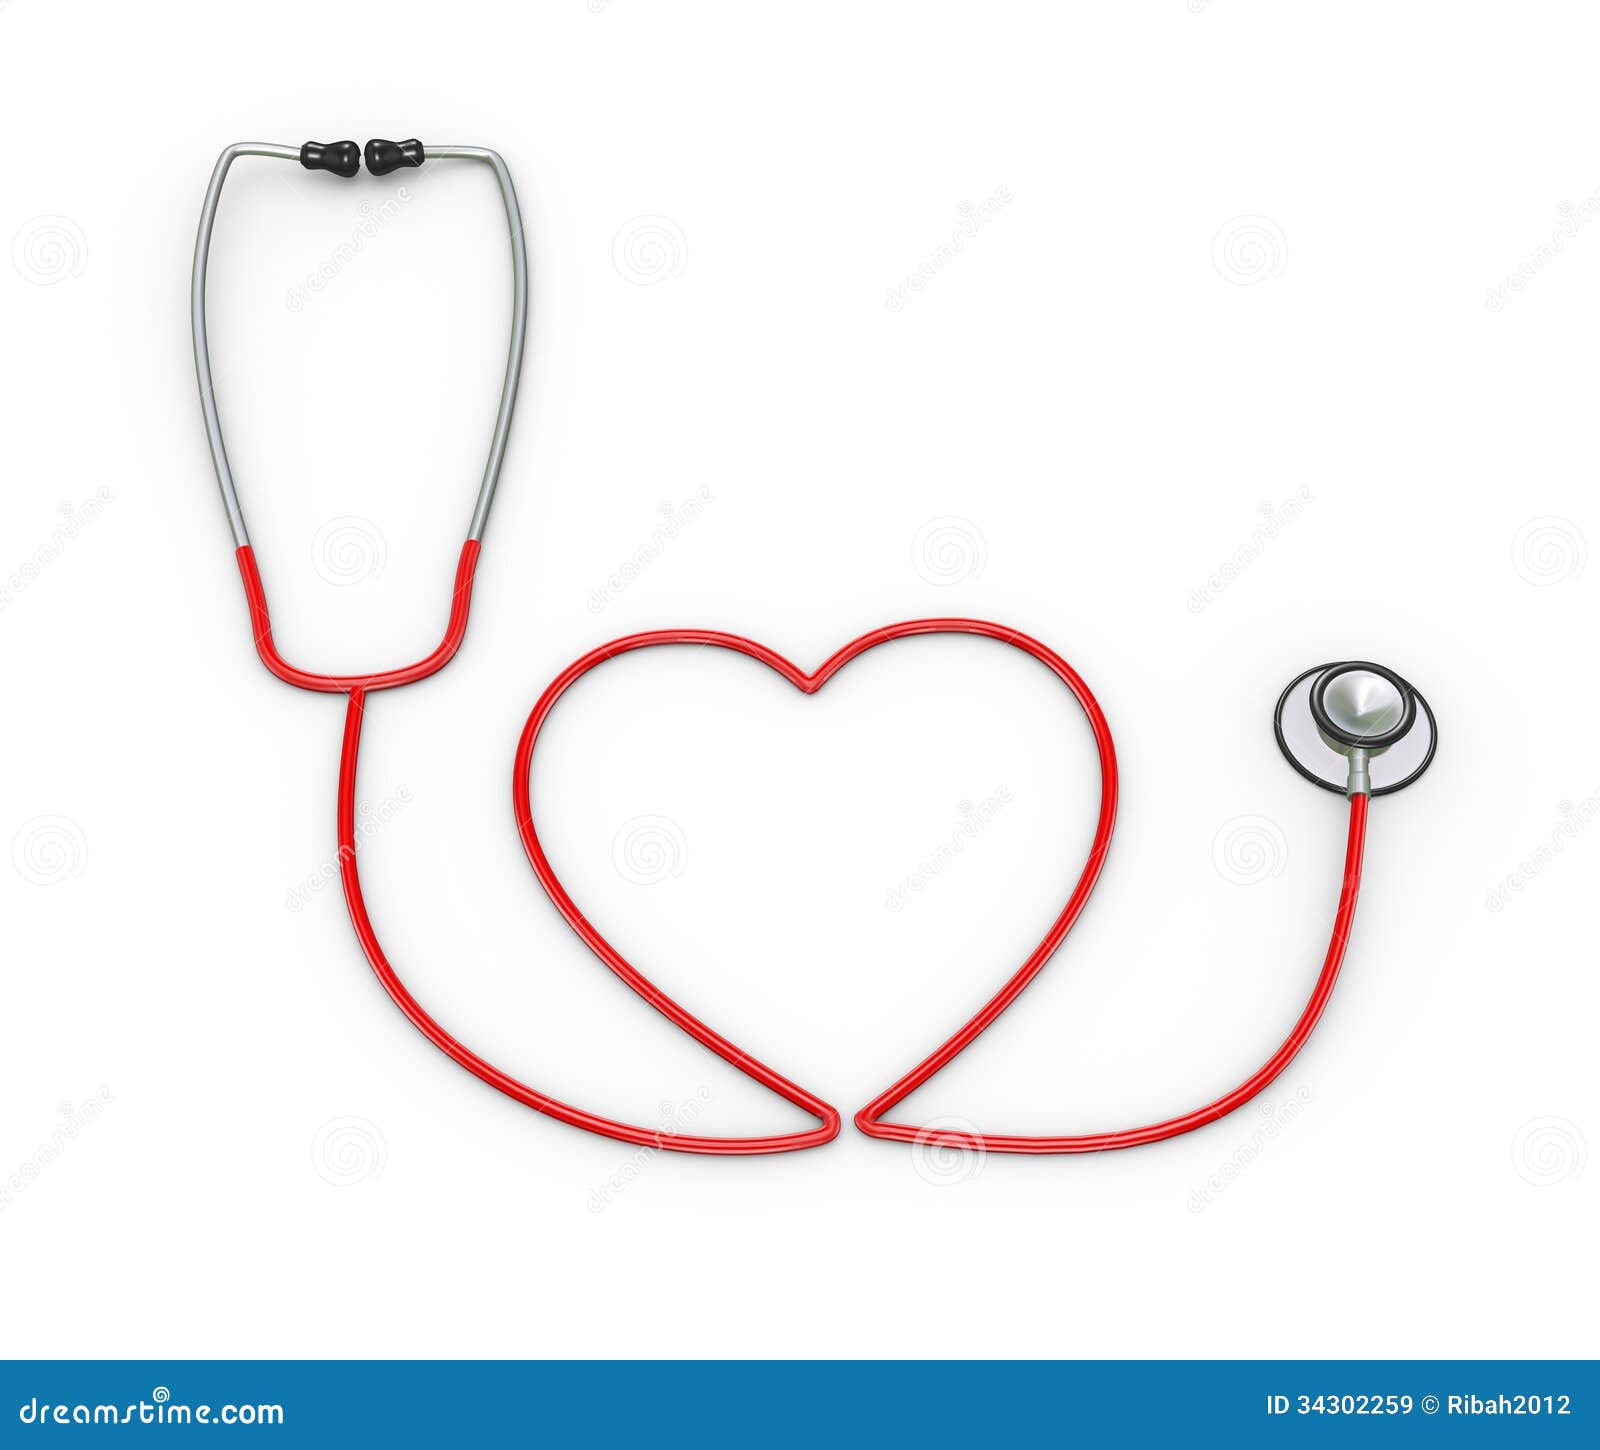 free heart stethoscope clipart - photo #30